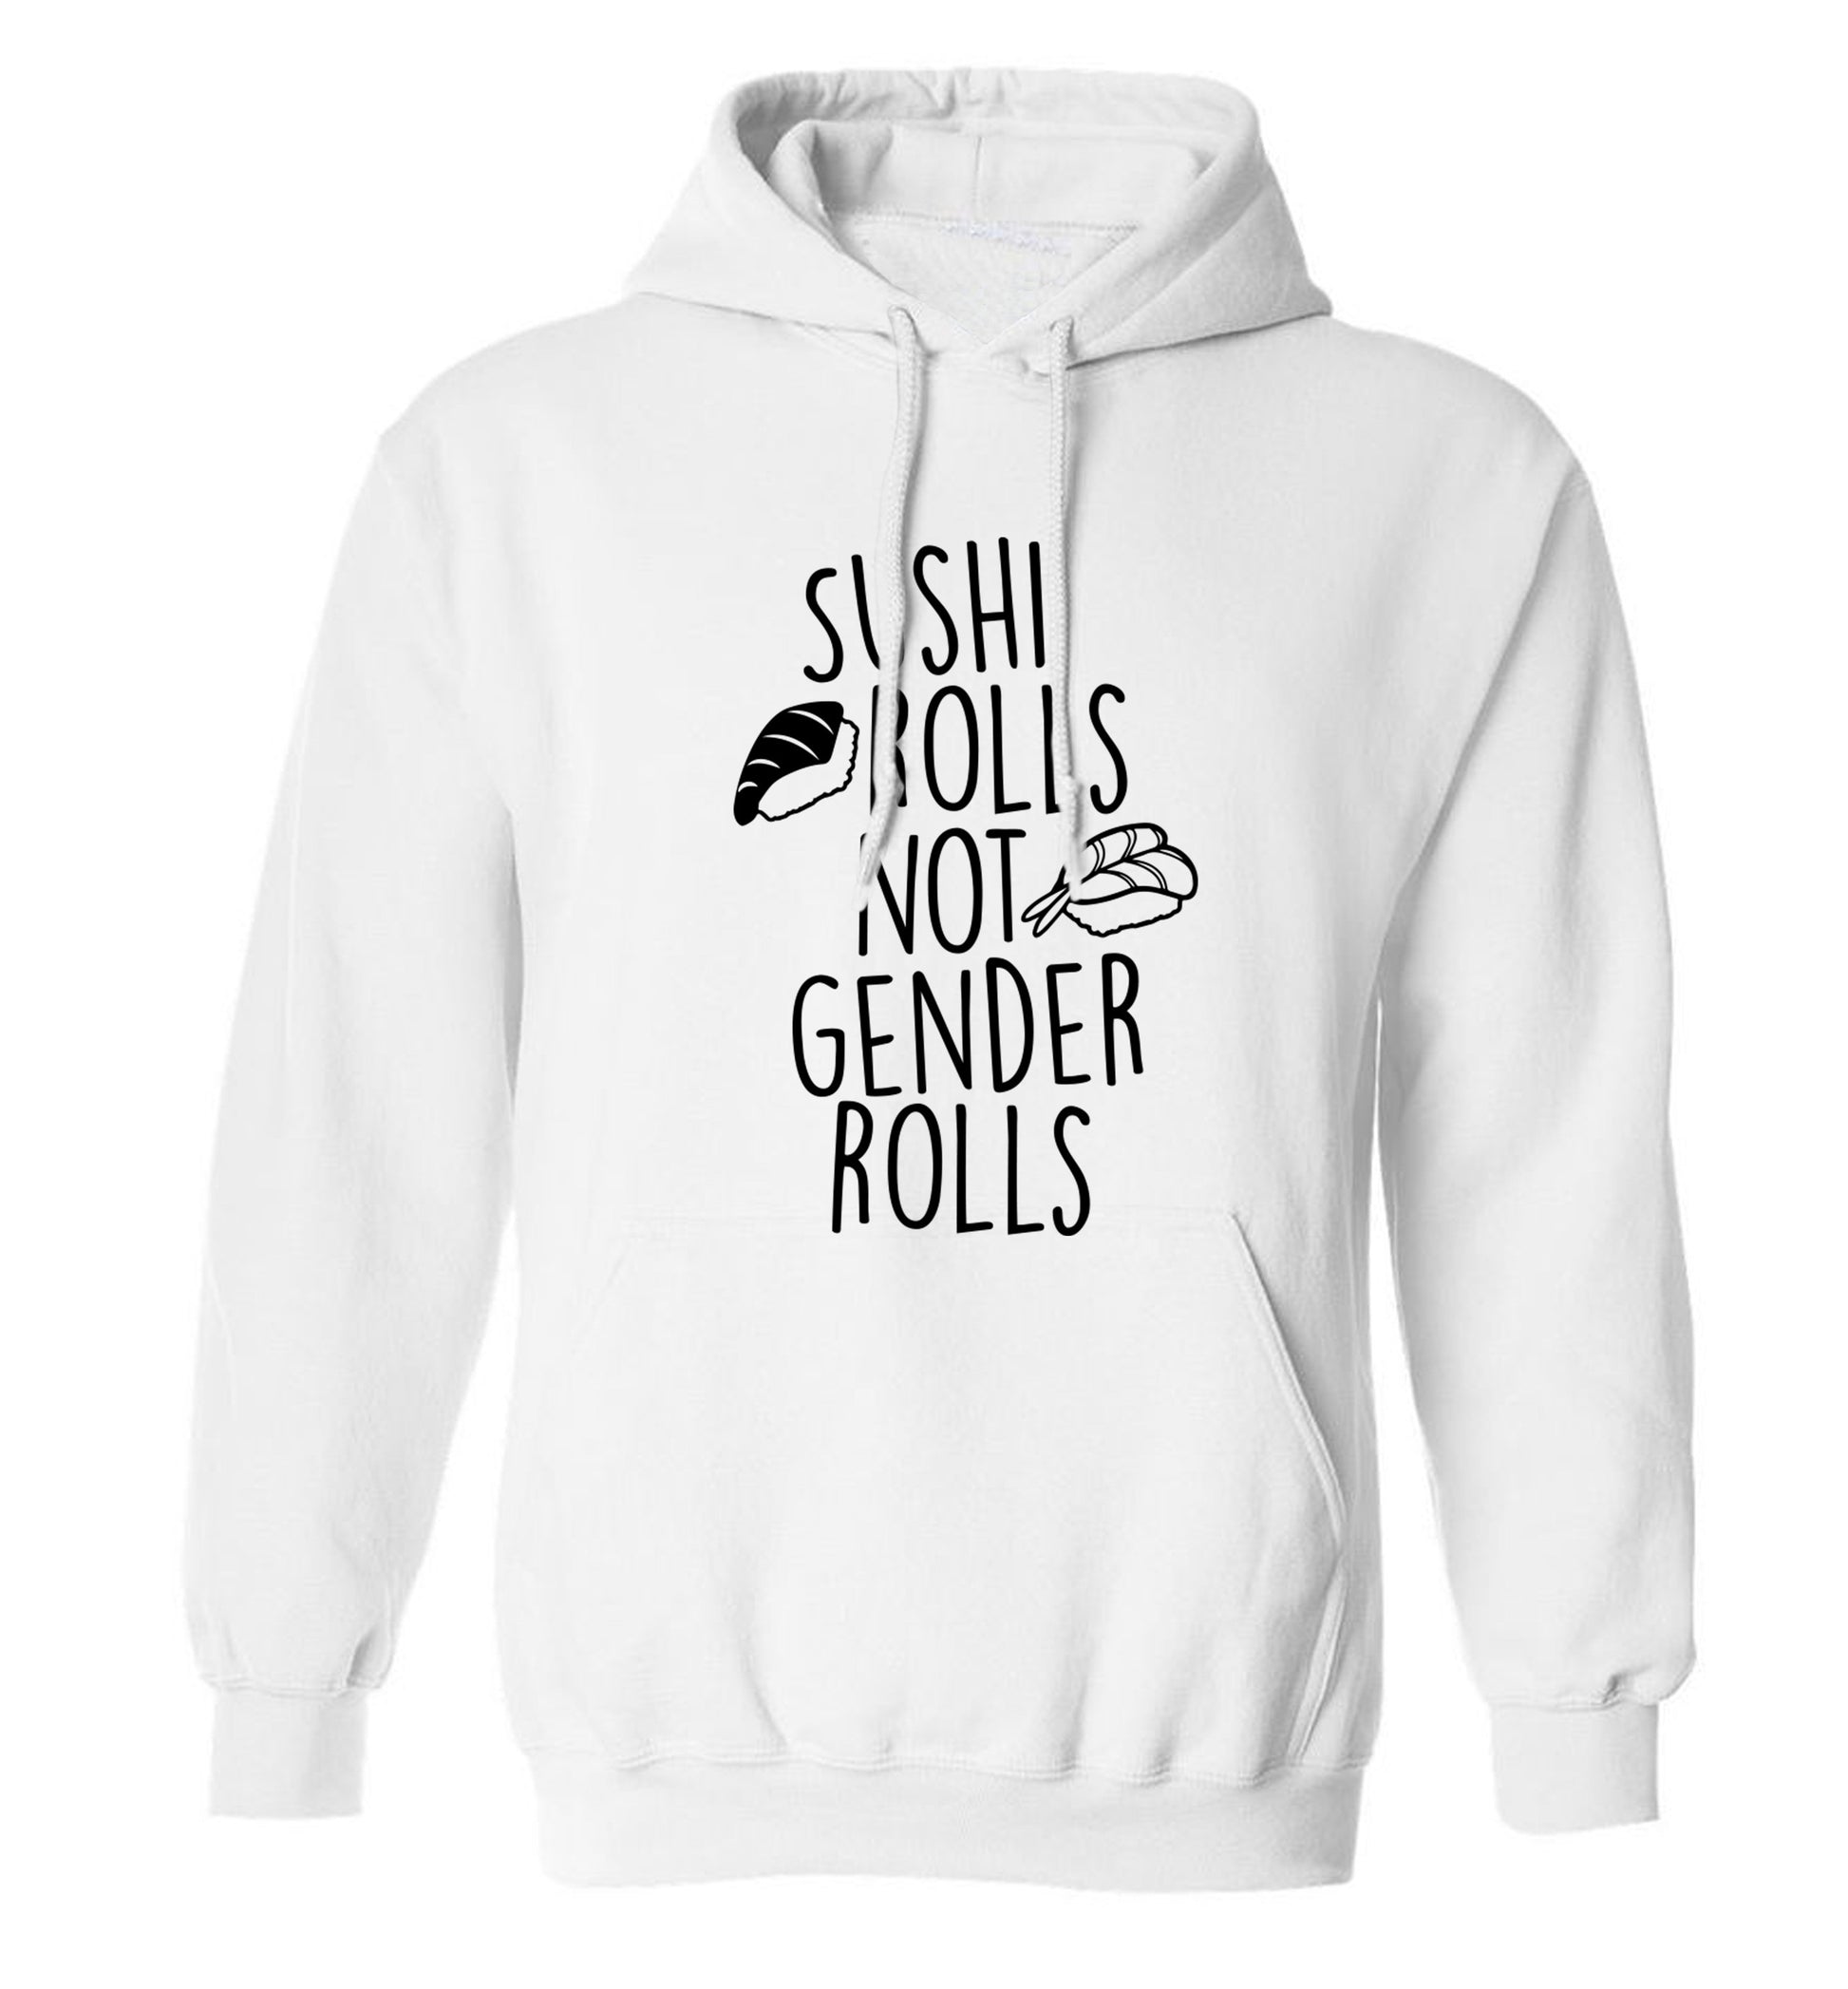 Sushi rolls not gender rolls adults unisex white hoodie 2XL